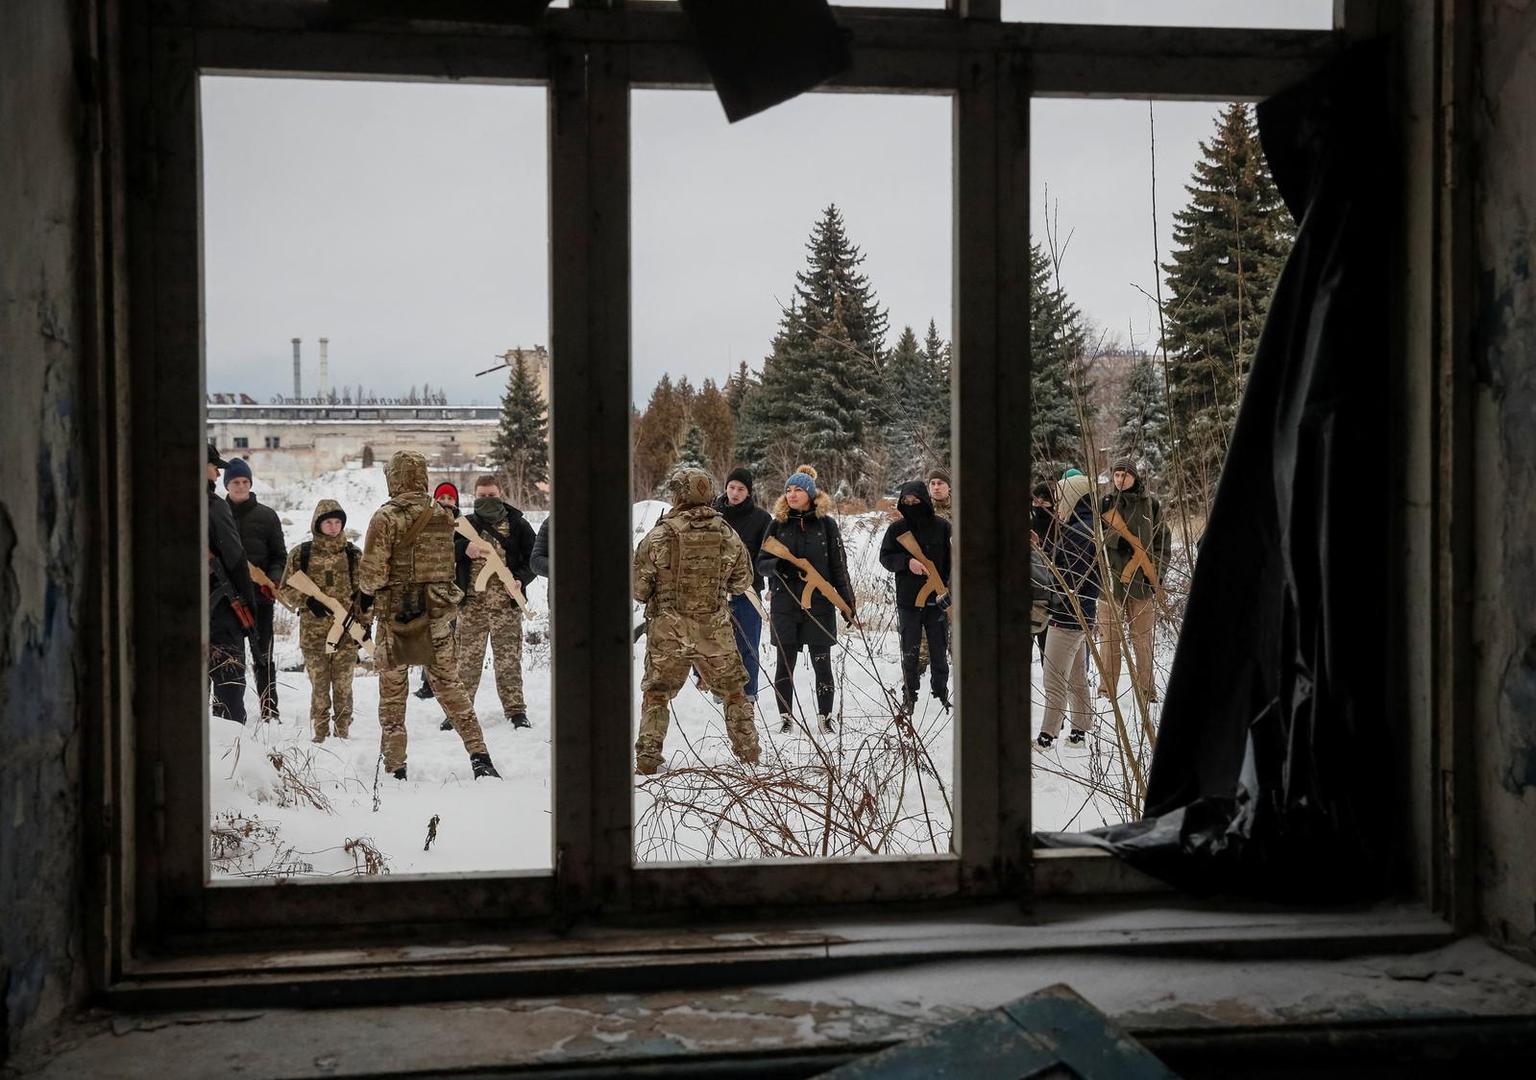 Veterans of the Ukrainian National Guard Azov battalion conduct military exercises for civilians amid threat of Russian invasion in Kyiv, Ukraine January 30, 2022. REUTERS/Gleb Garanich Photo: GLEB GARANICH/REUTERS